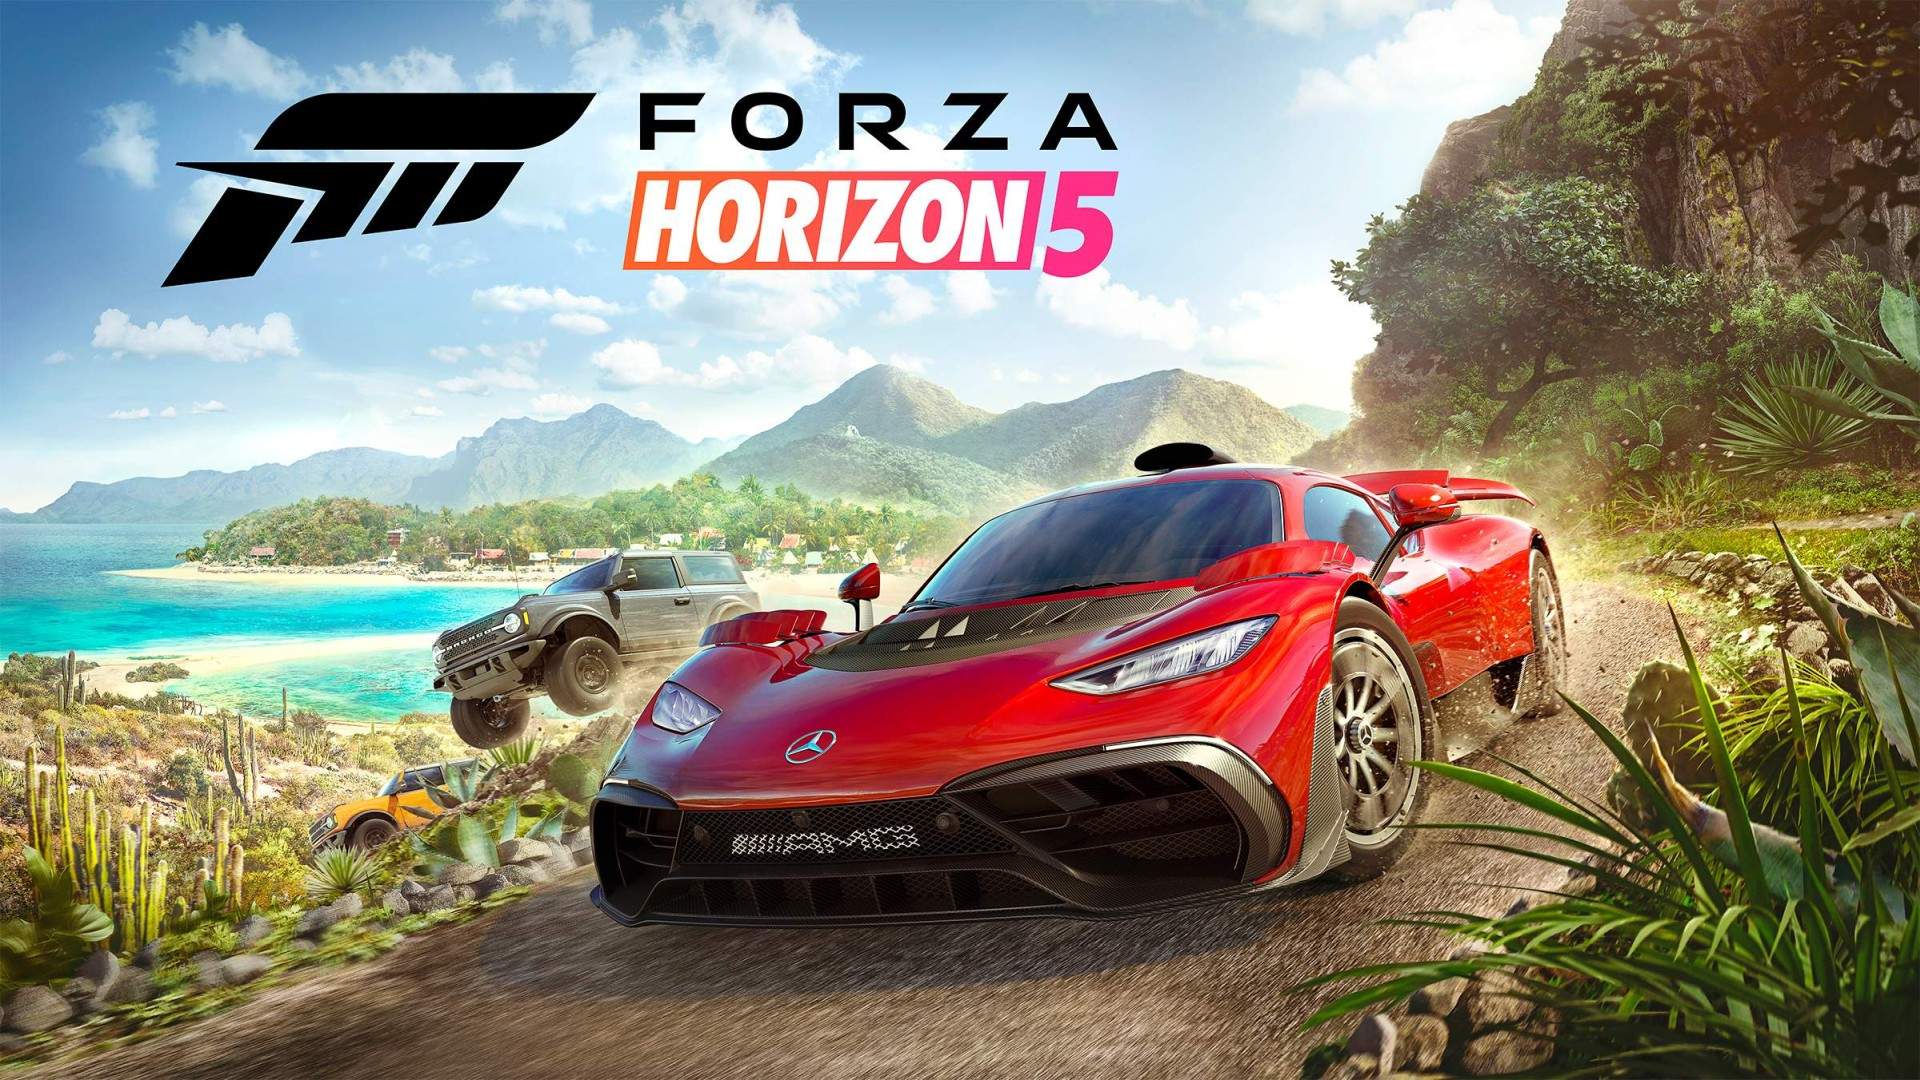 Forza Horizon 5 PC Free Download (v1.629.845.0)